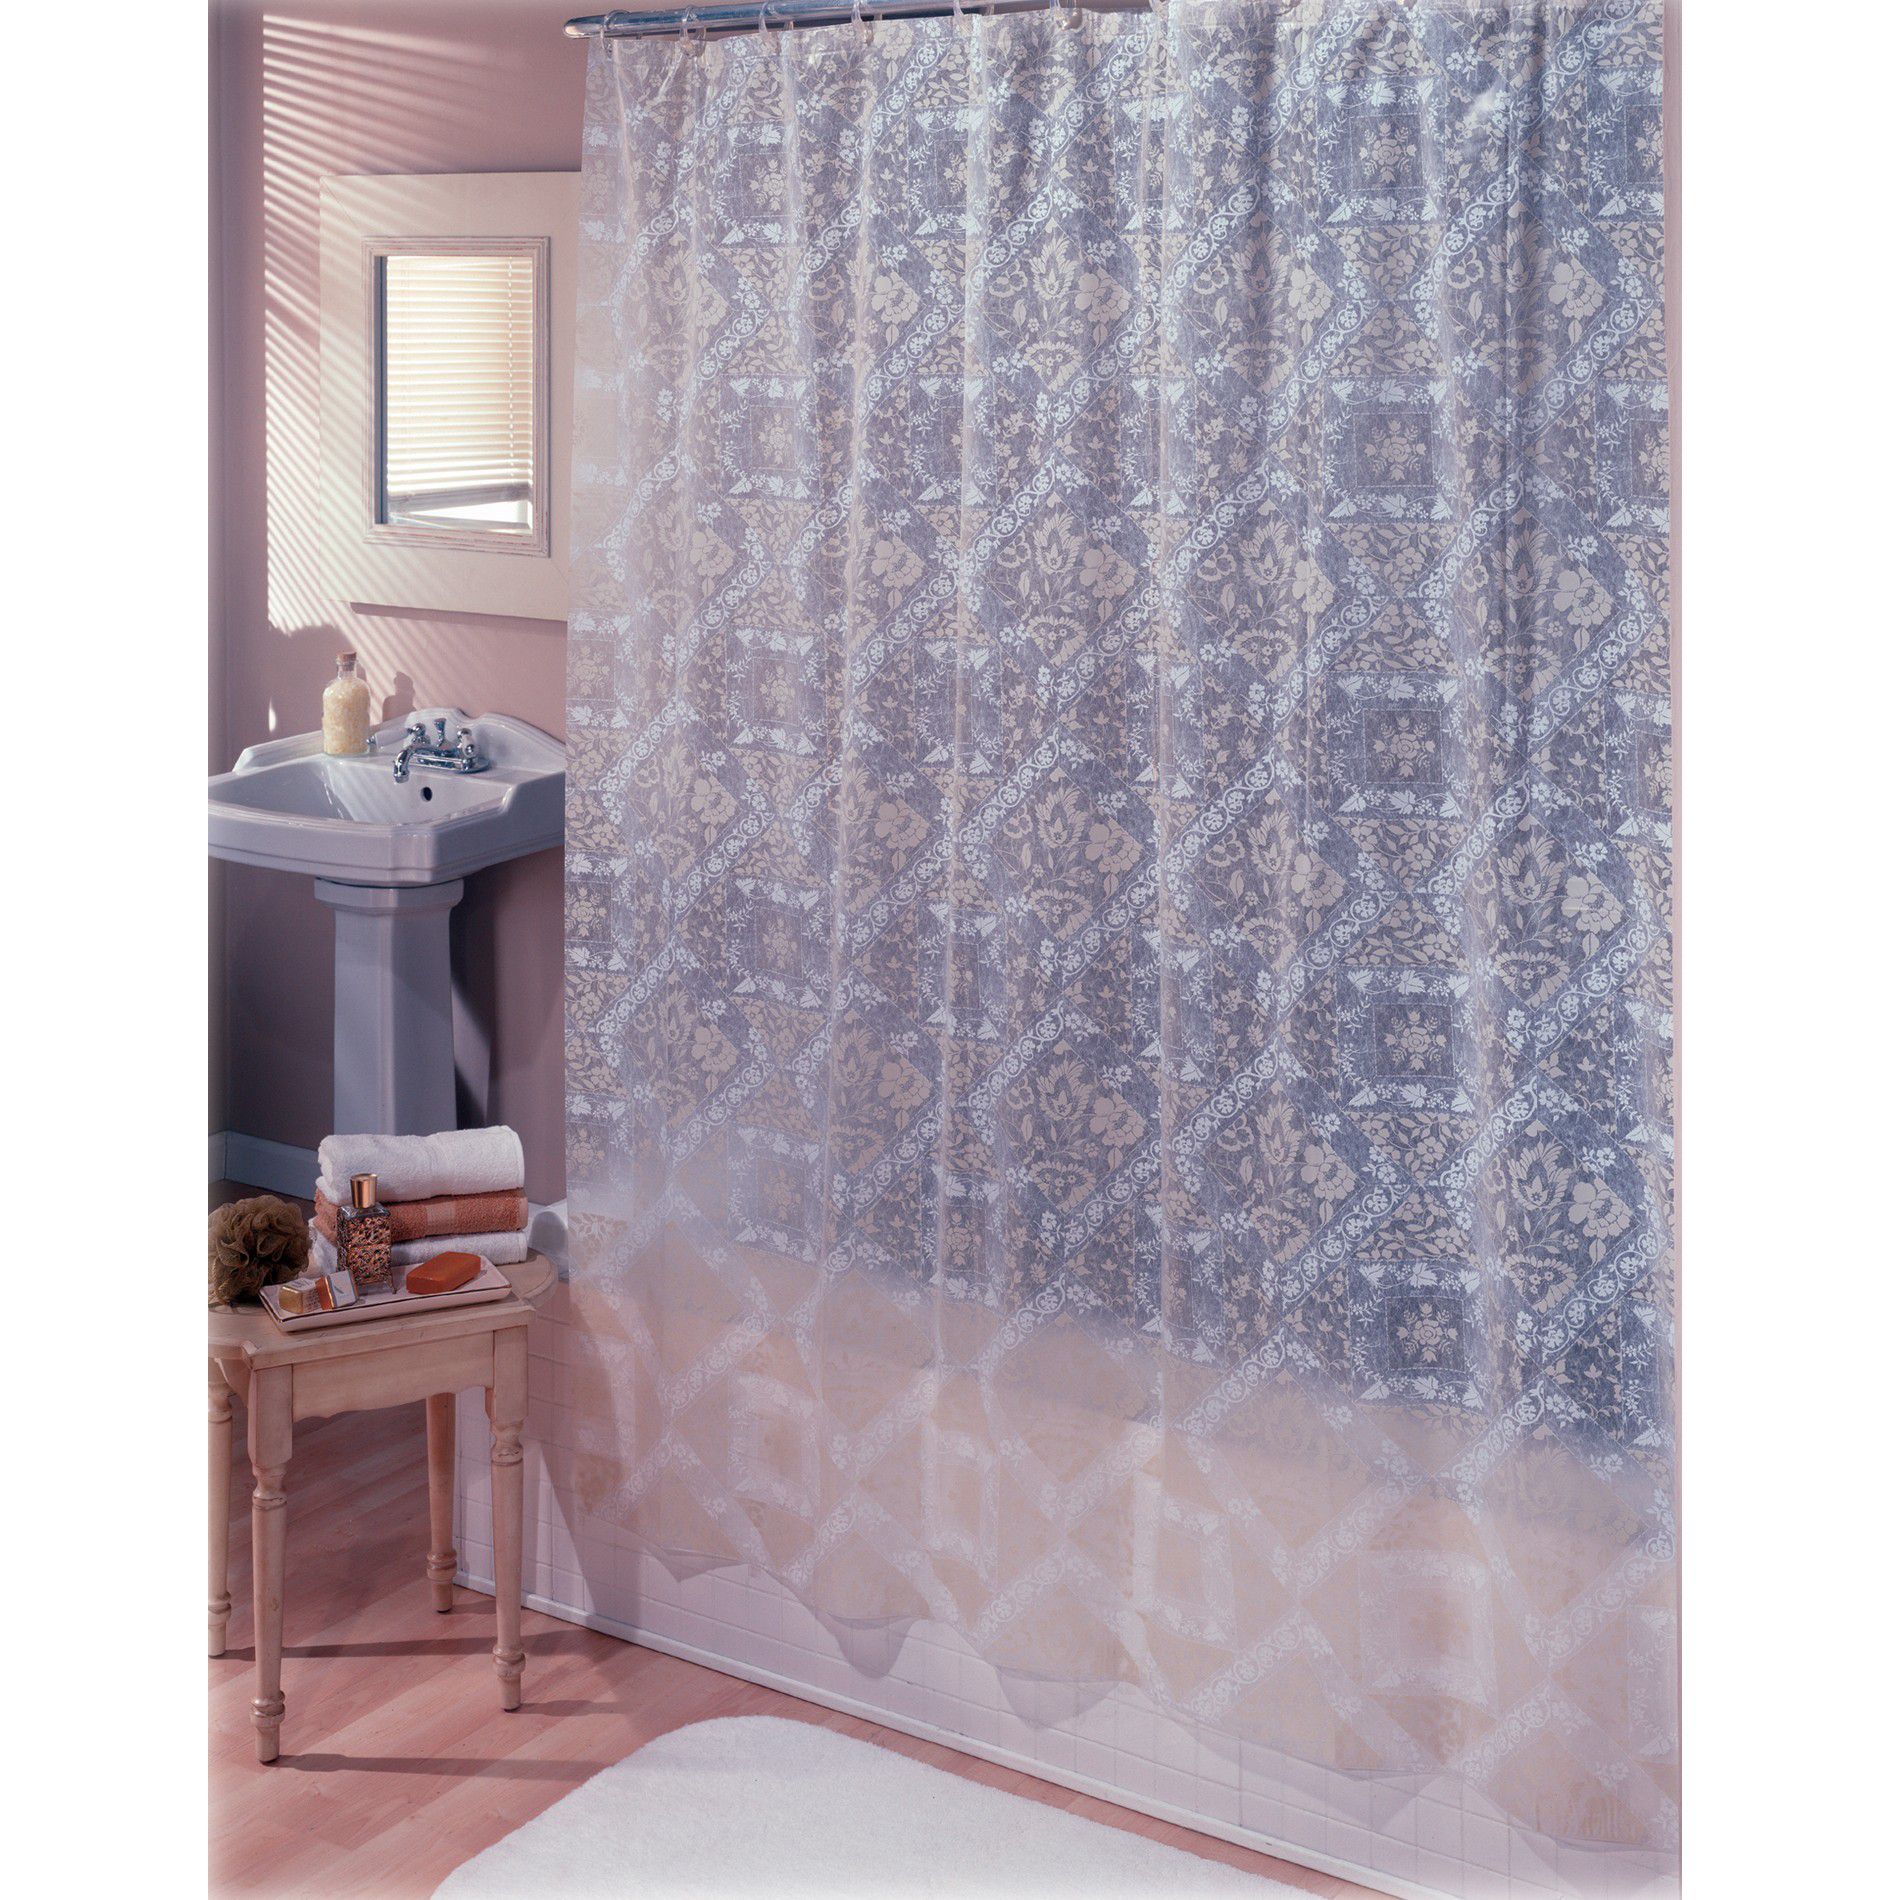 Essential Home Shower Curtain Geneva Lace Vinyl